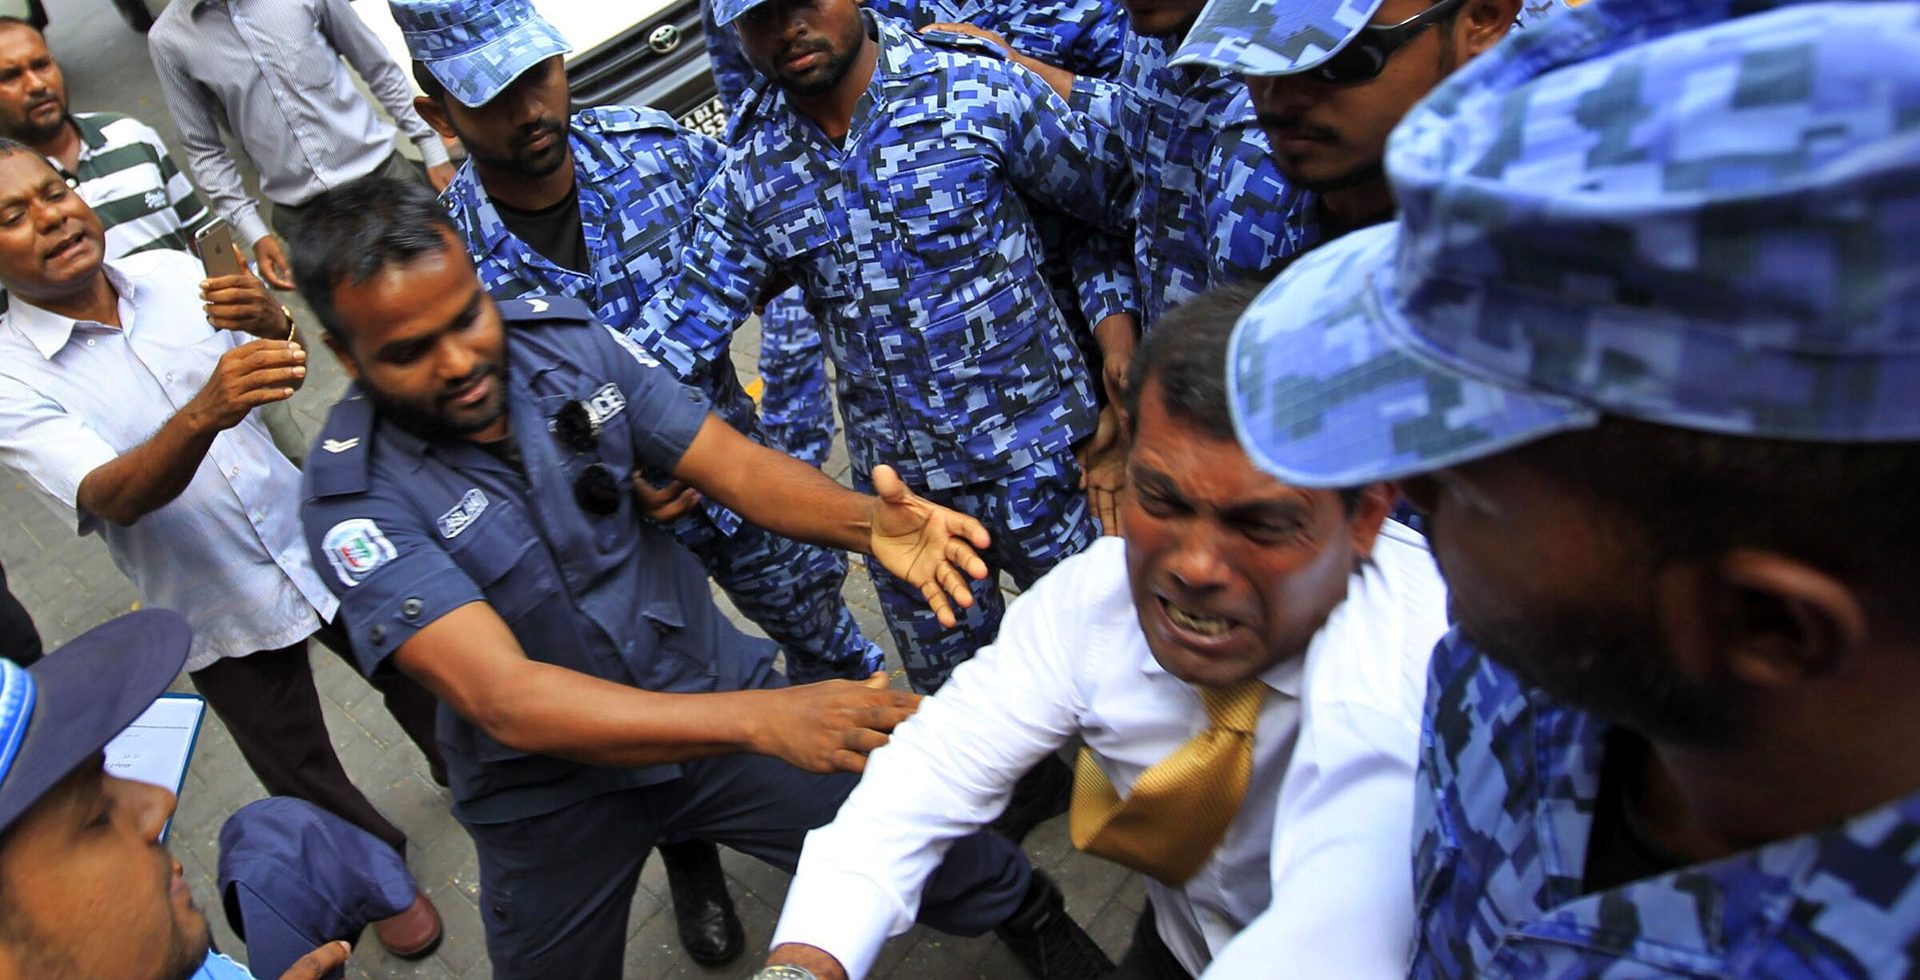 Former President of the Maldives, Mohamed Nasheed, being arrested